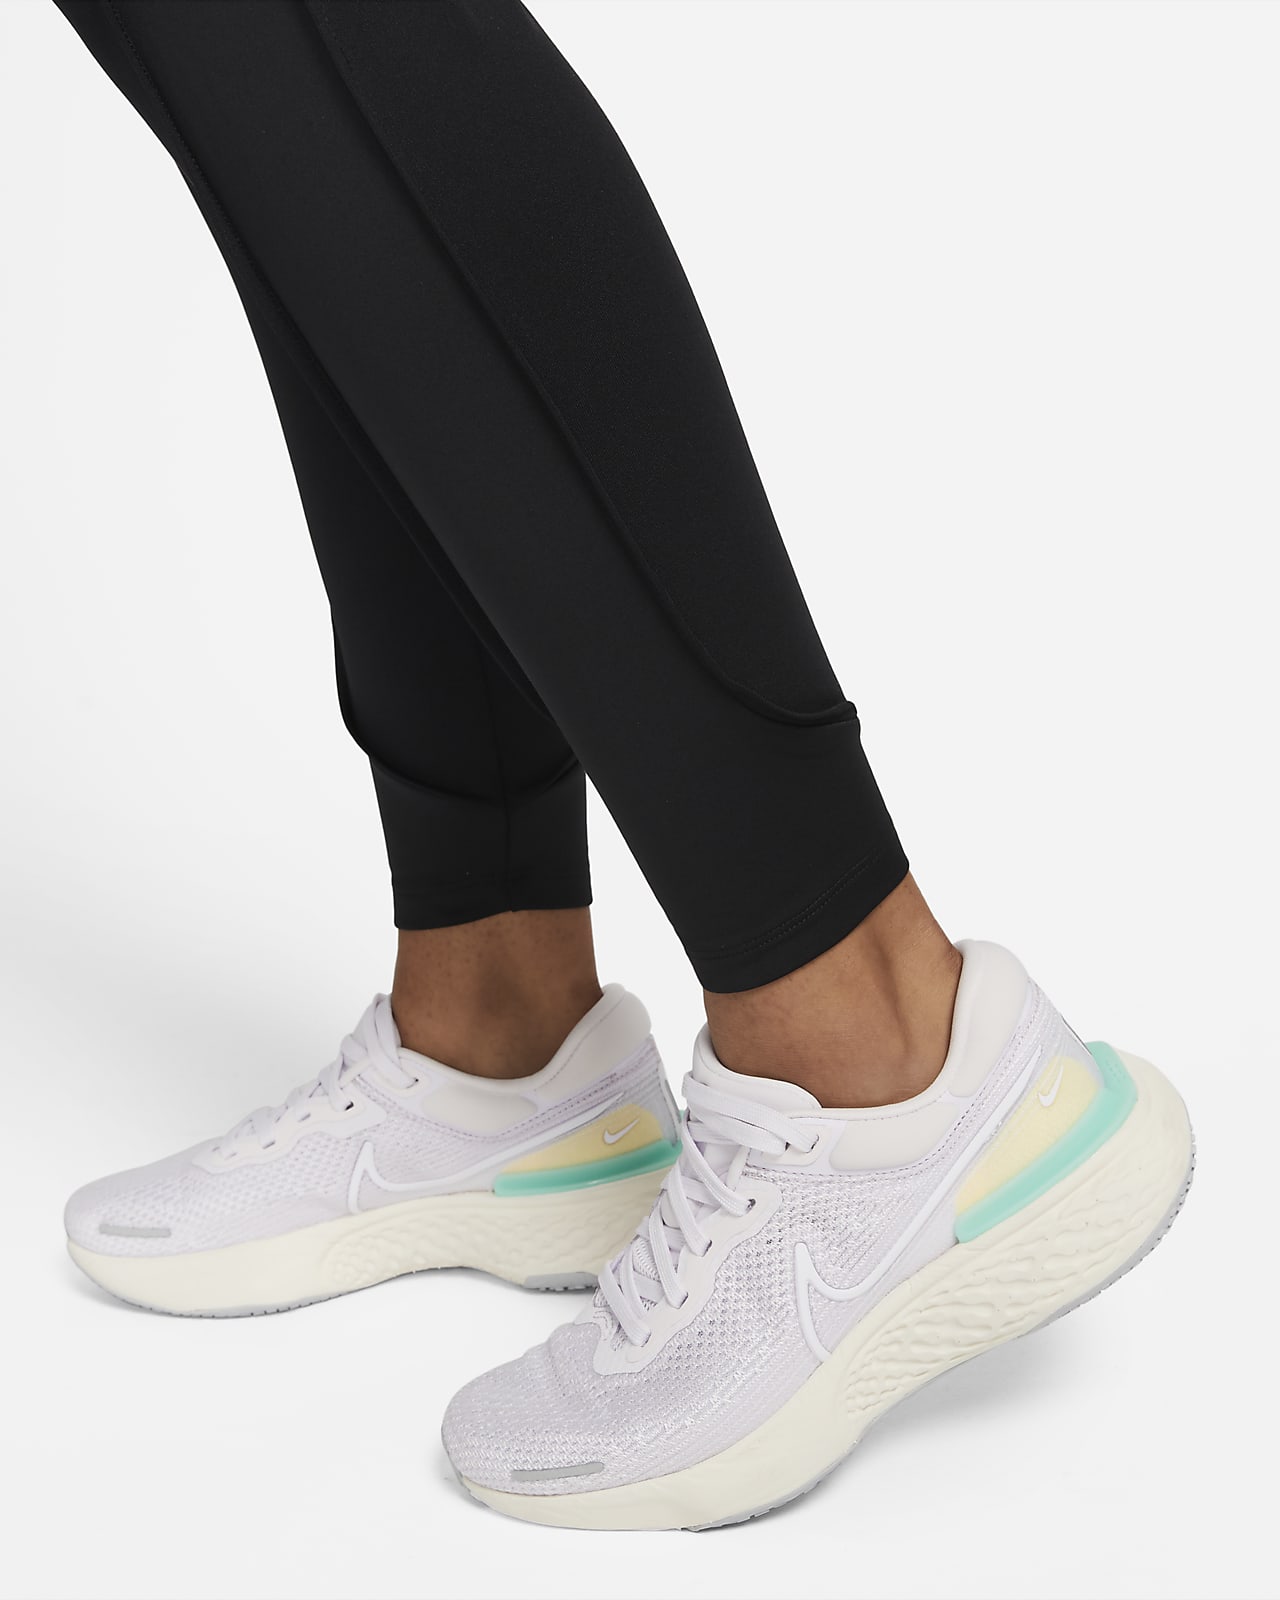 Pantalon Femme Nike ThermaFit Essential Running - Running Warehouse Europe